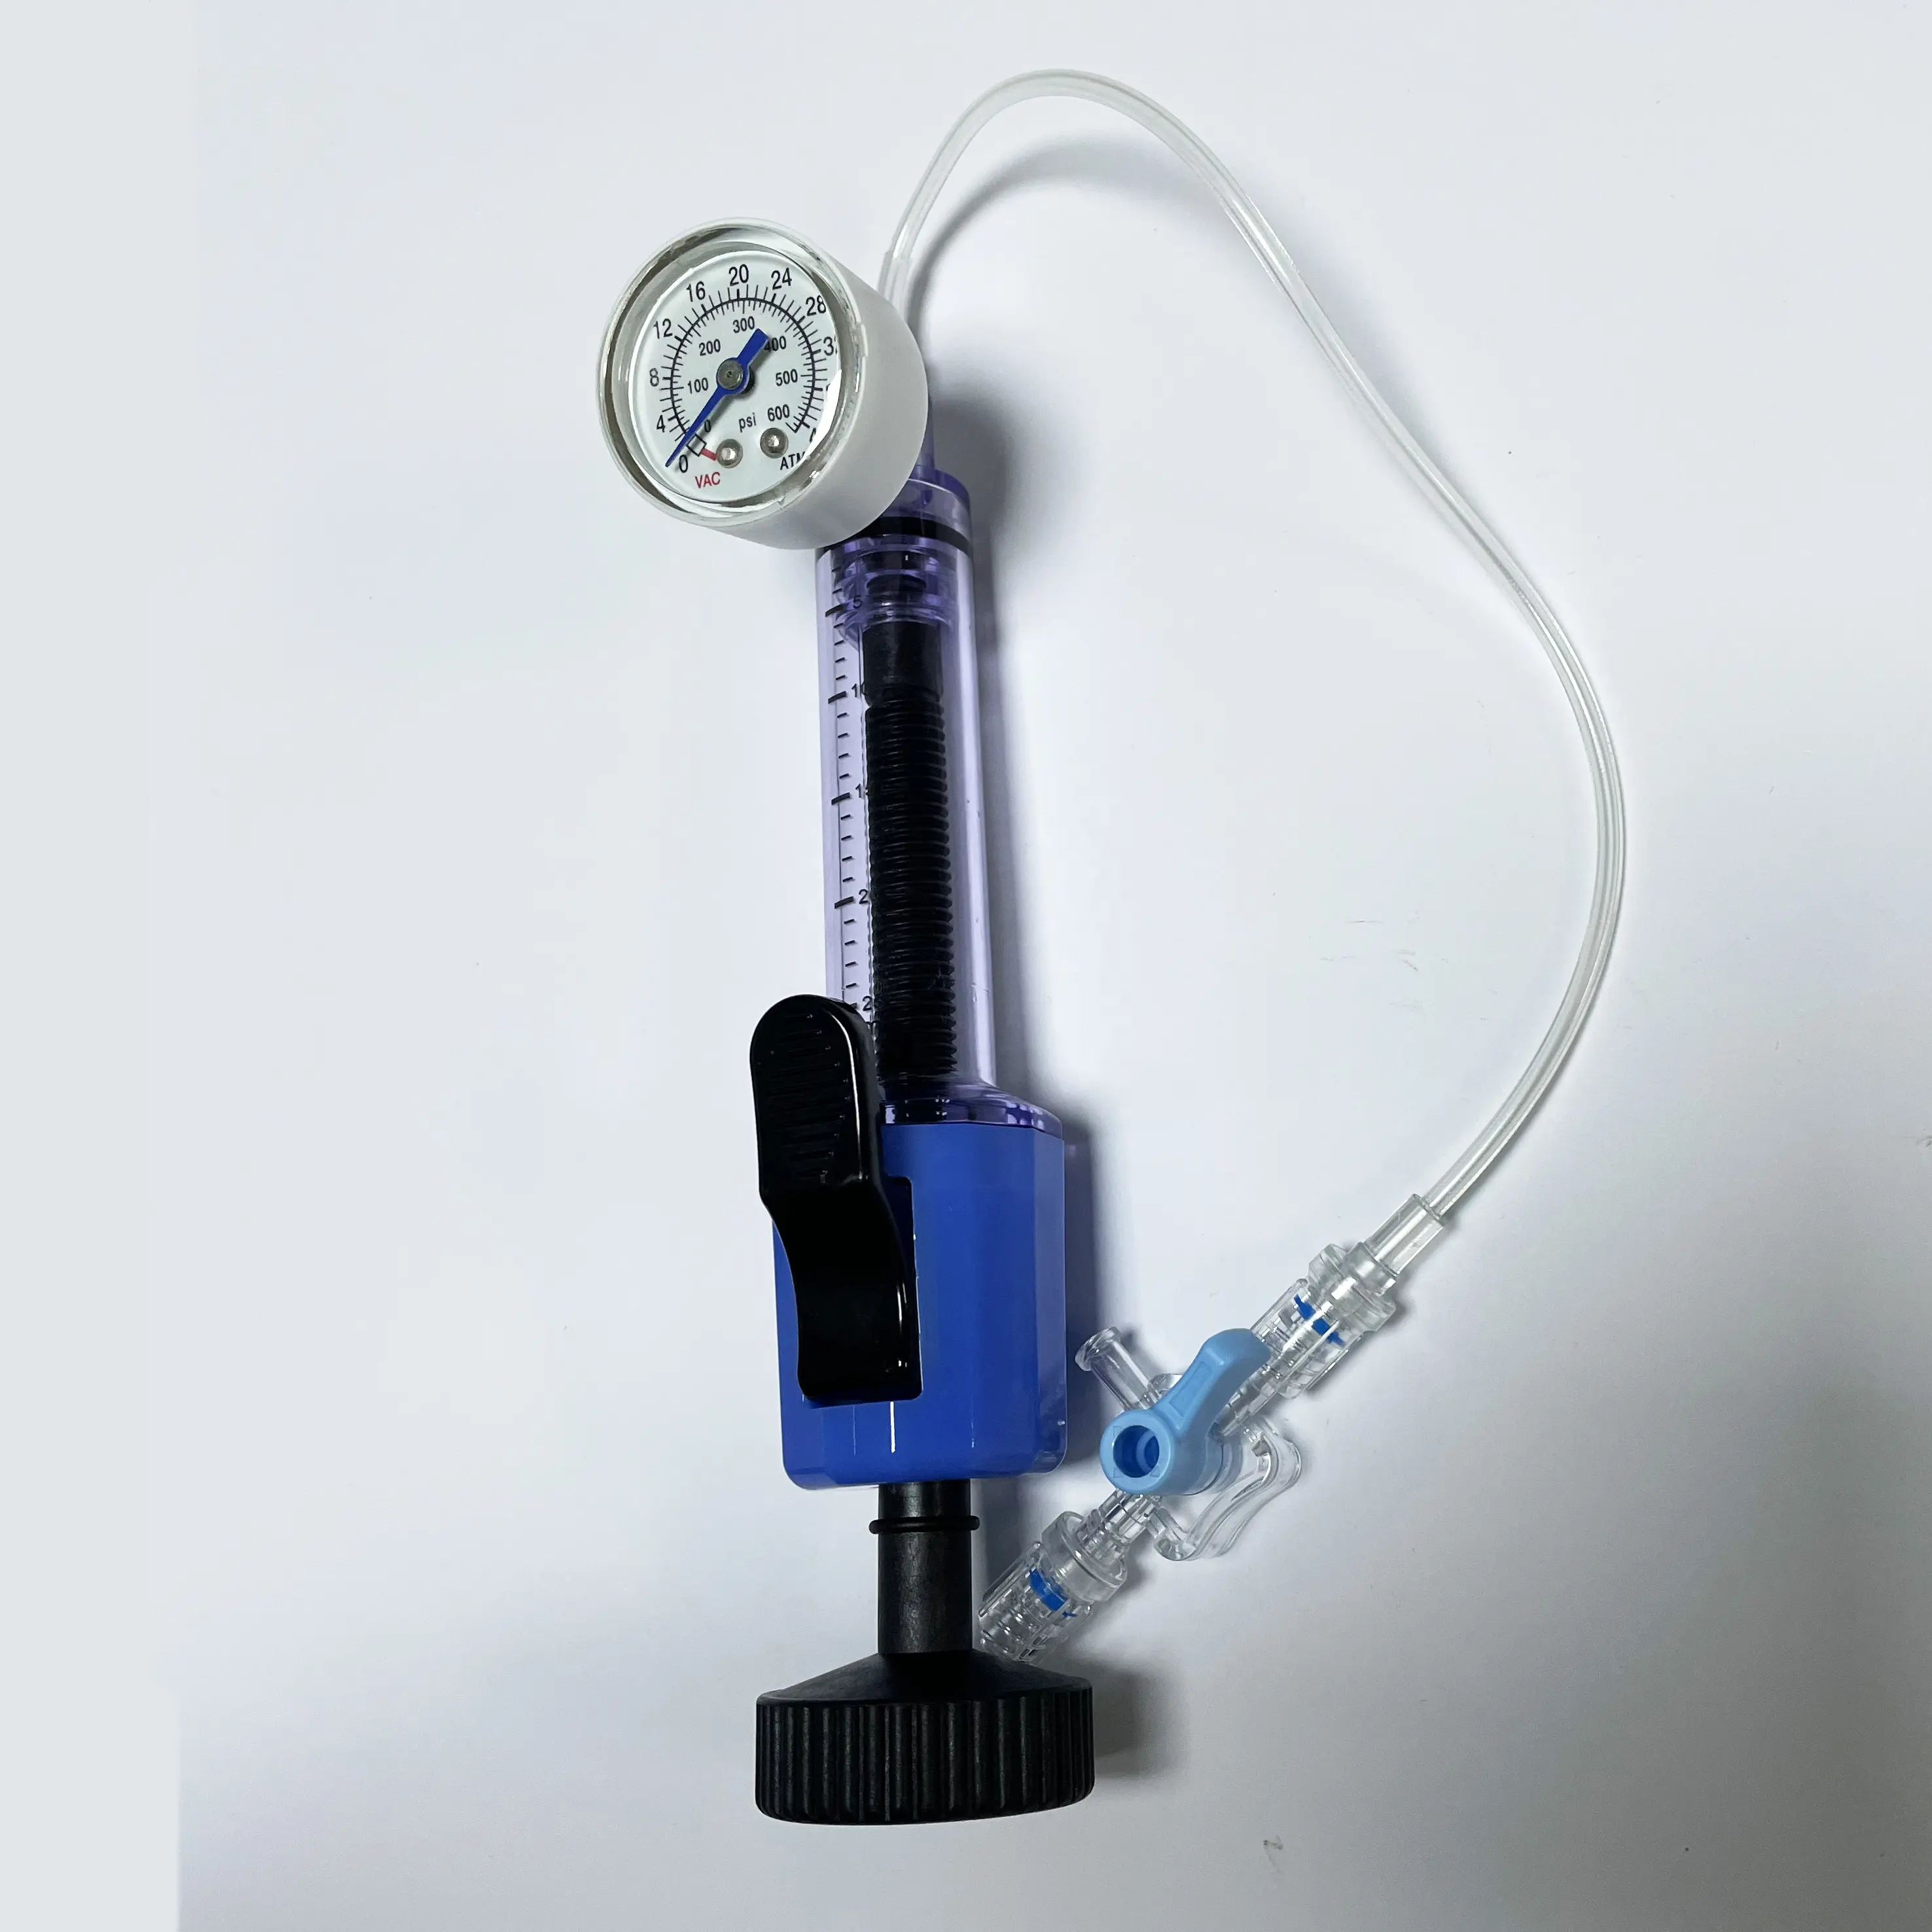 Tianck medical supplies PTCA cardiovascular intervention pump single use balloon inflation device